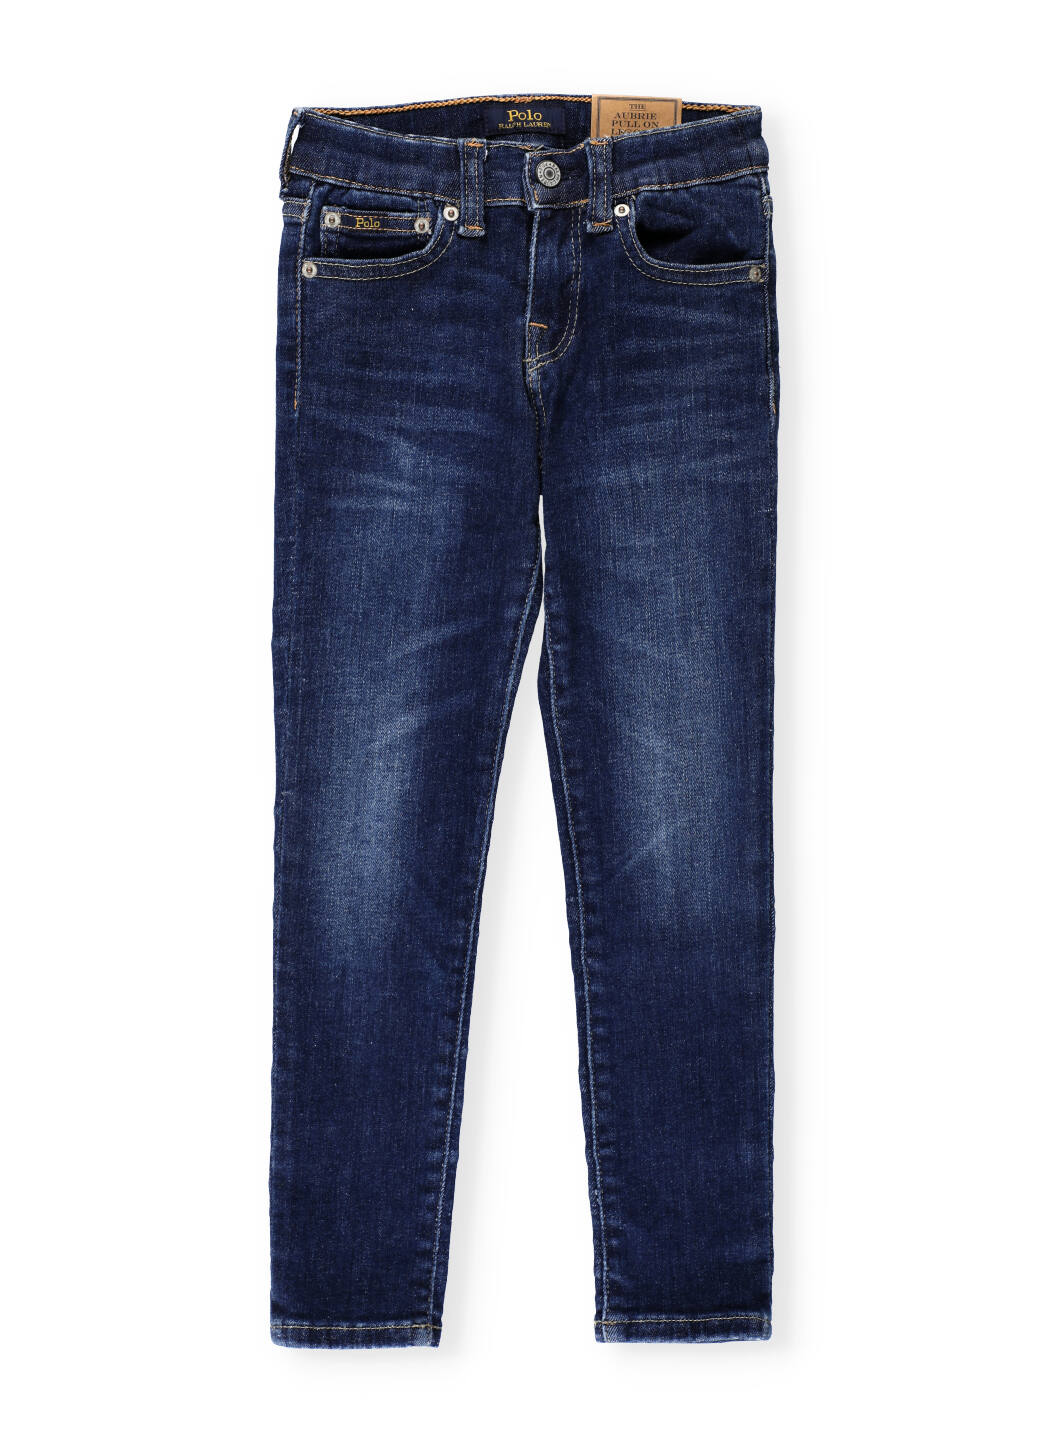 Ralph Lauren aubrie pull jeans